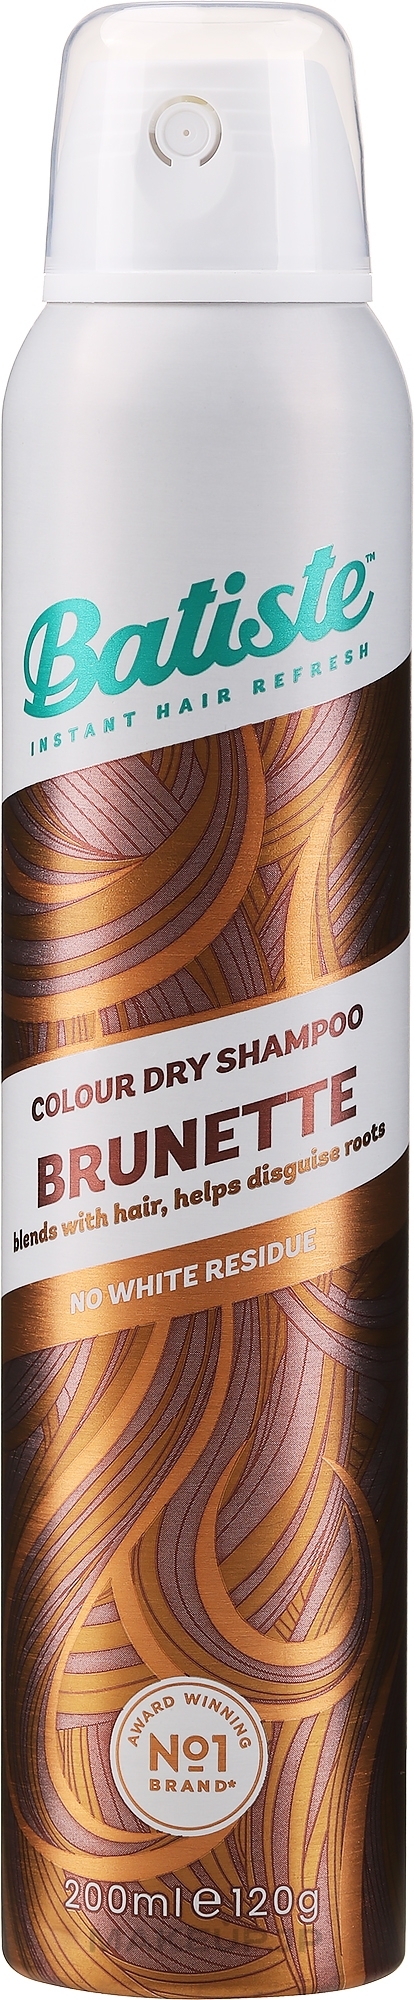 Dry Shampoo - Batiste Dry Shampoo Medium and Brunette a Hint of Colour — photo 200 ml